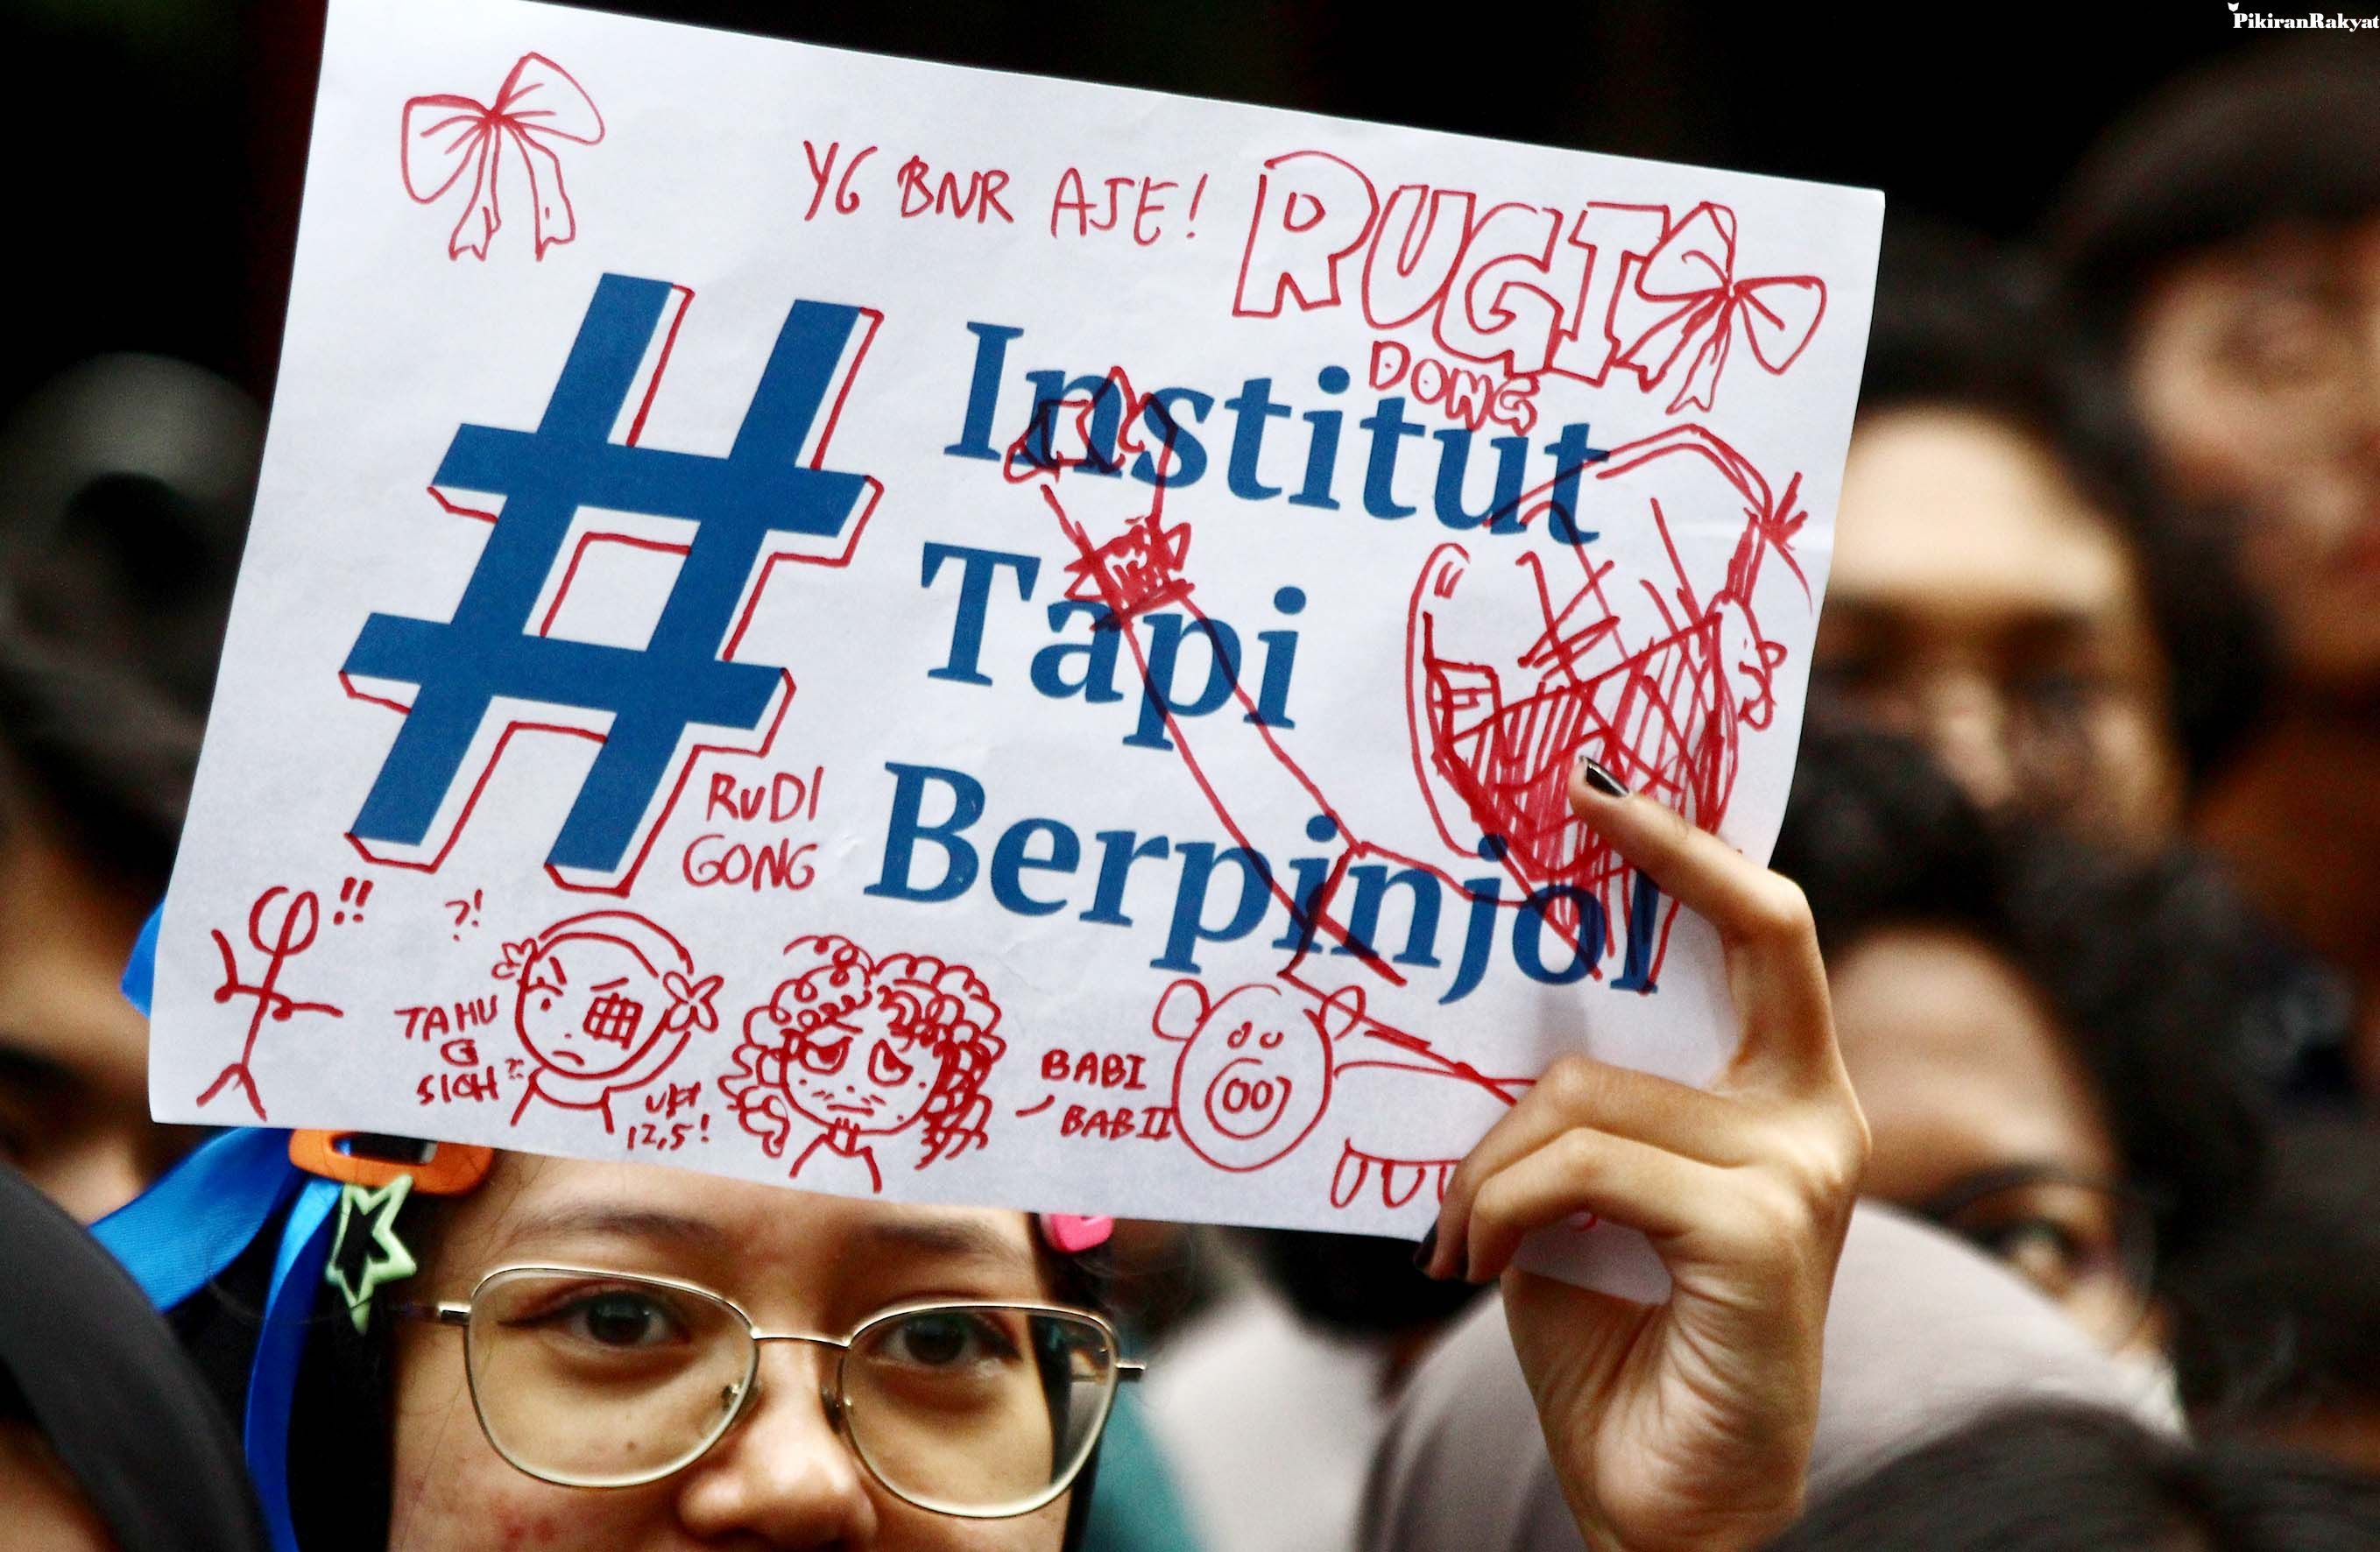 OJK Menghubungi Danacita untuk Menjelaskan Pembayaran Uang Kuliah Tunggal di ITB